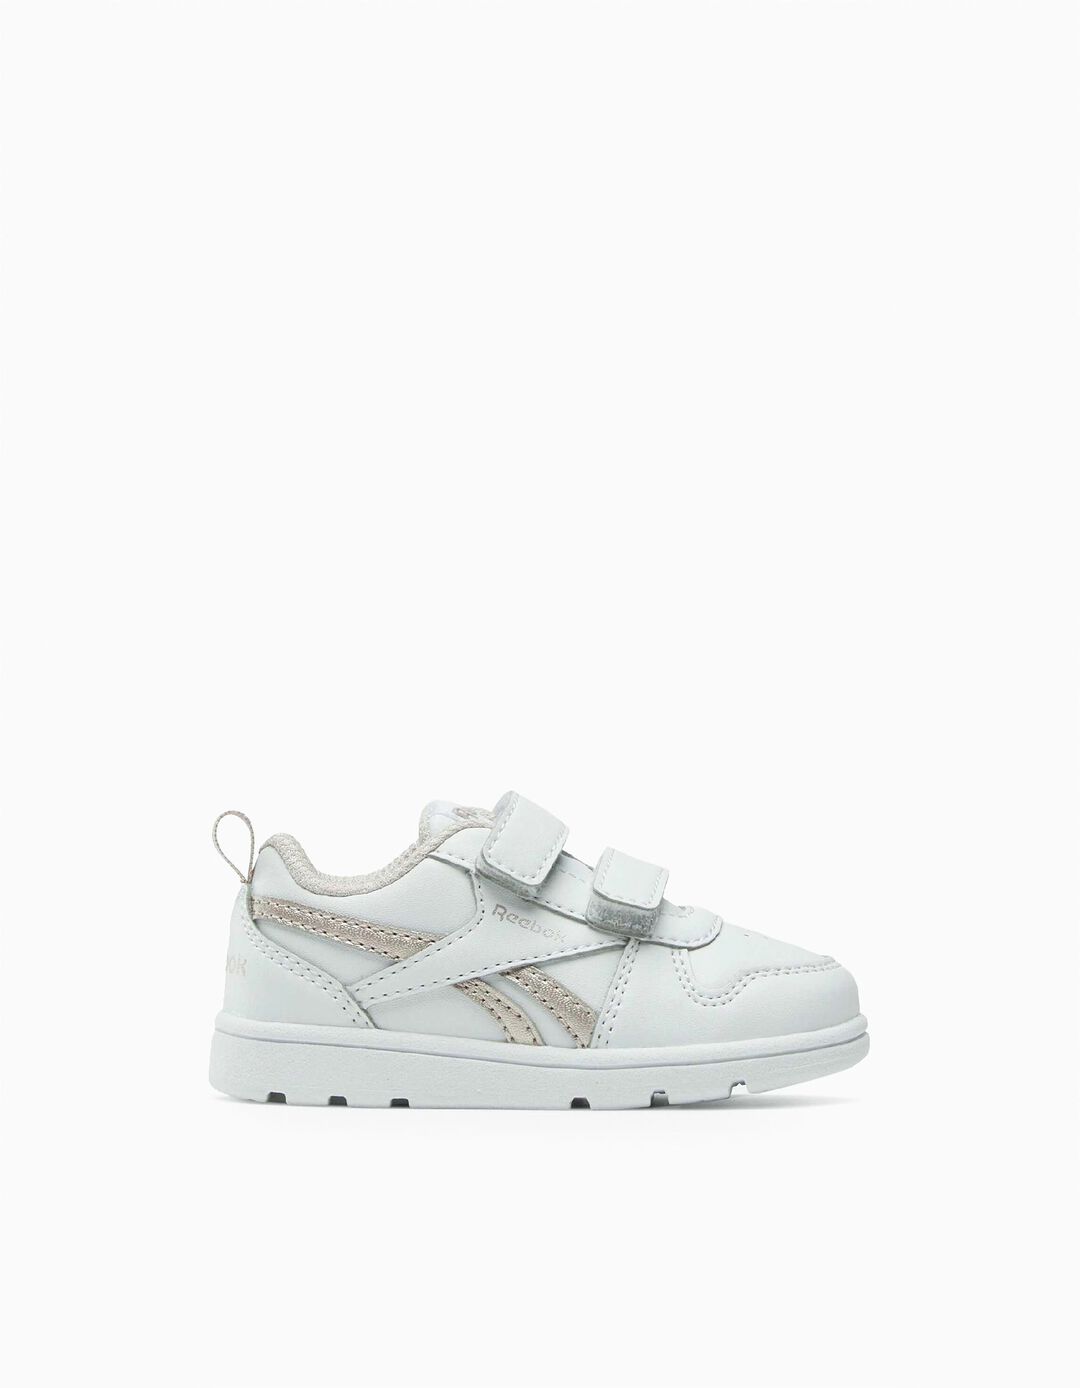 'Reebok' Sneakers, Baby Girl, White